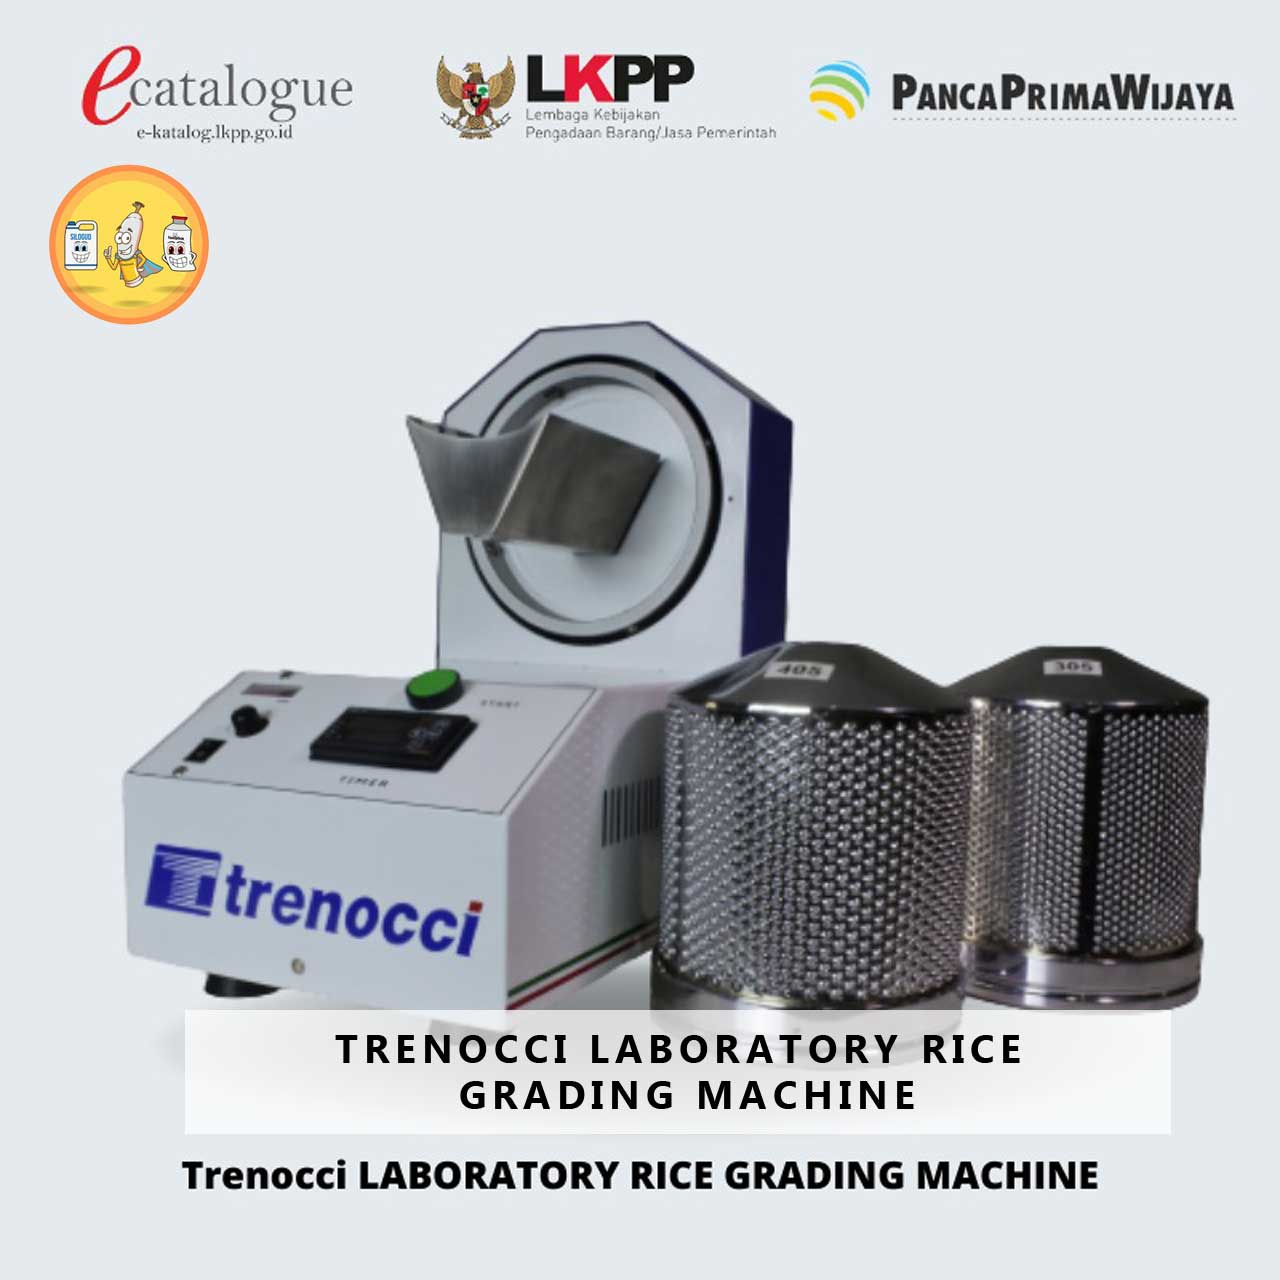 Trenocci Laboratory Rice Grading Machine